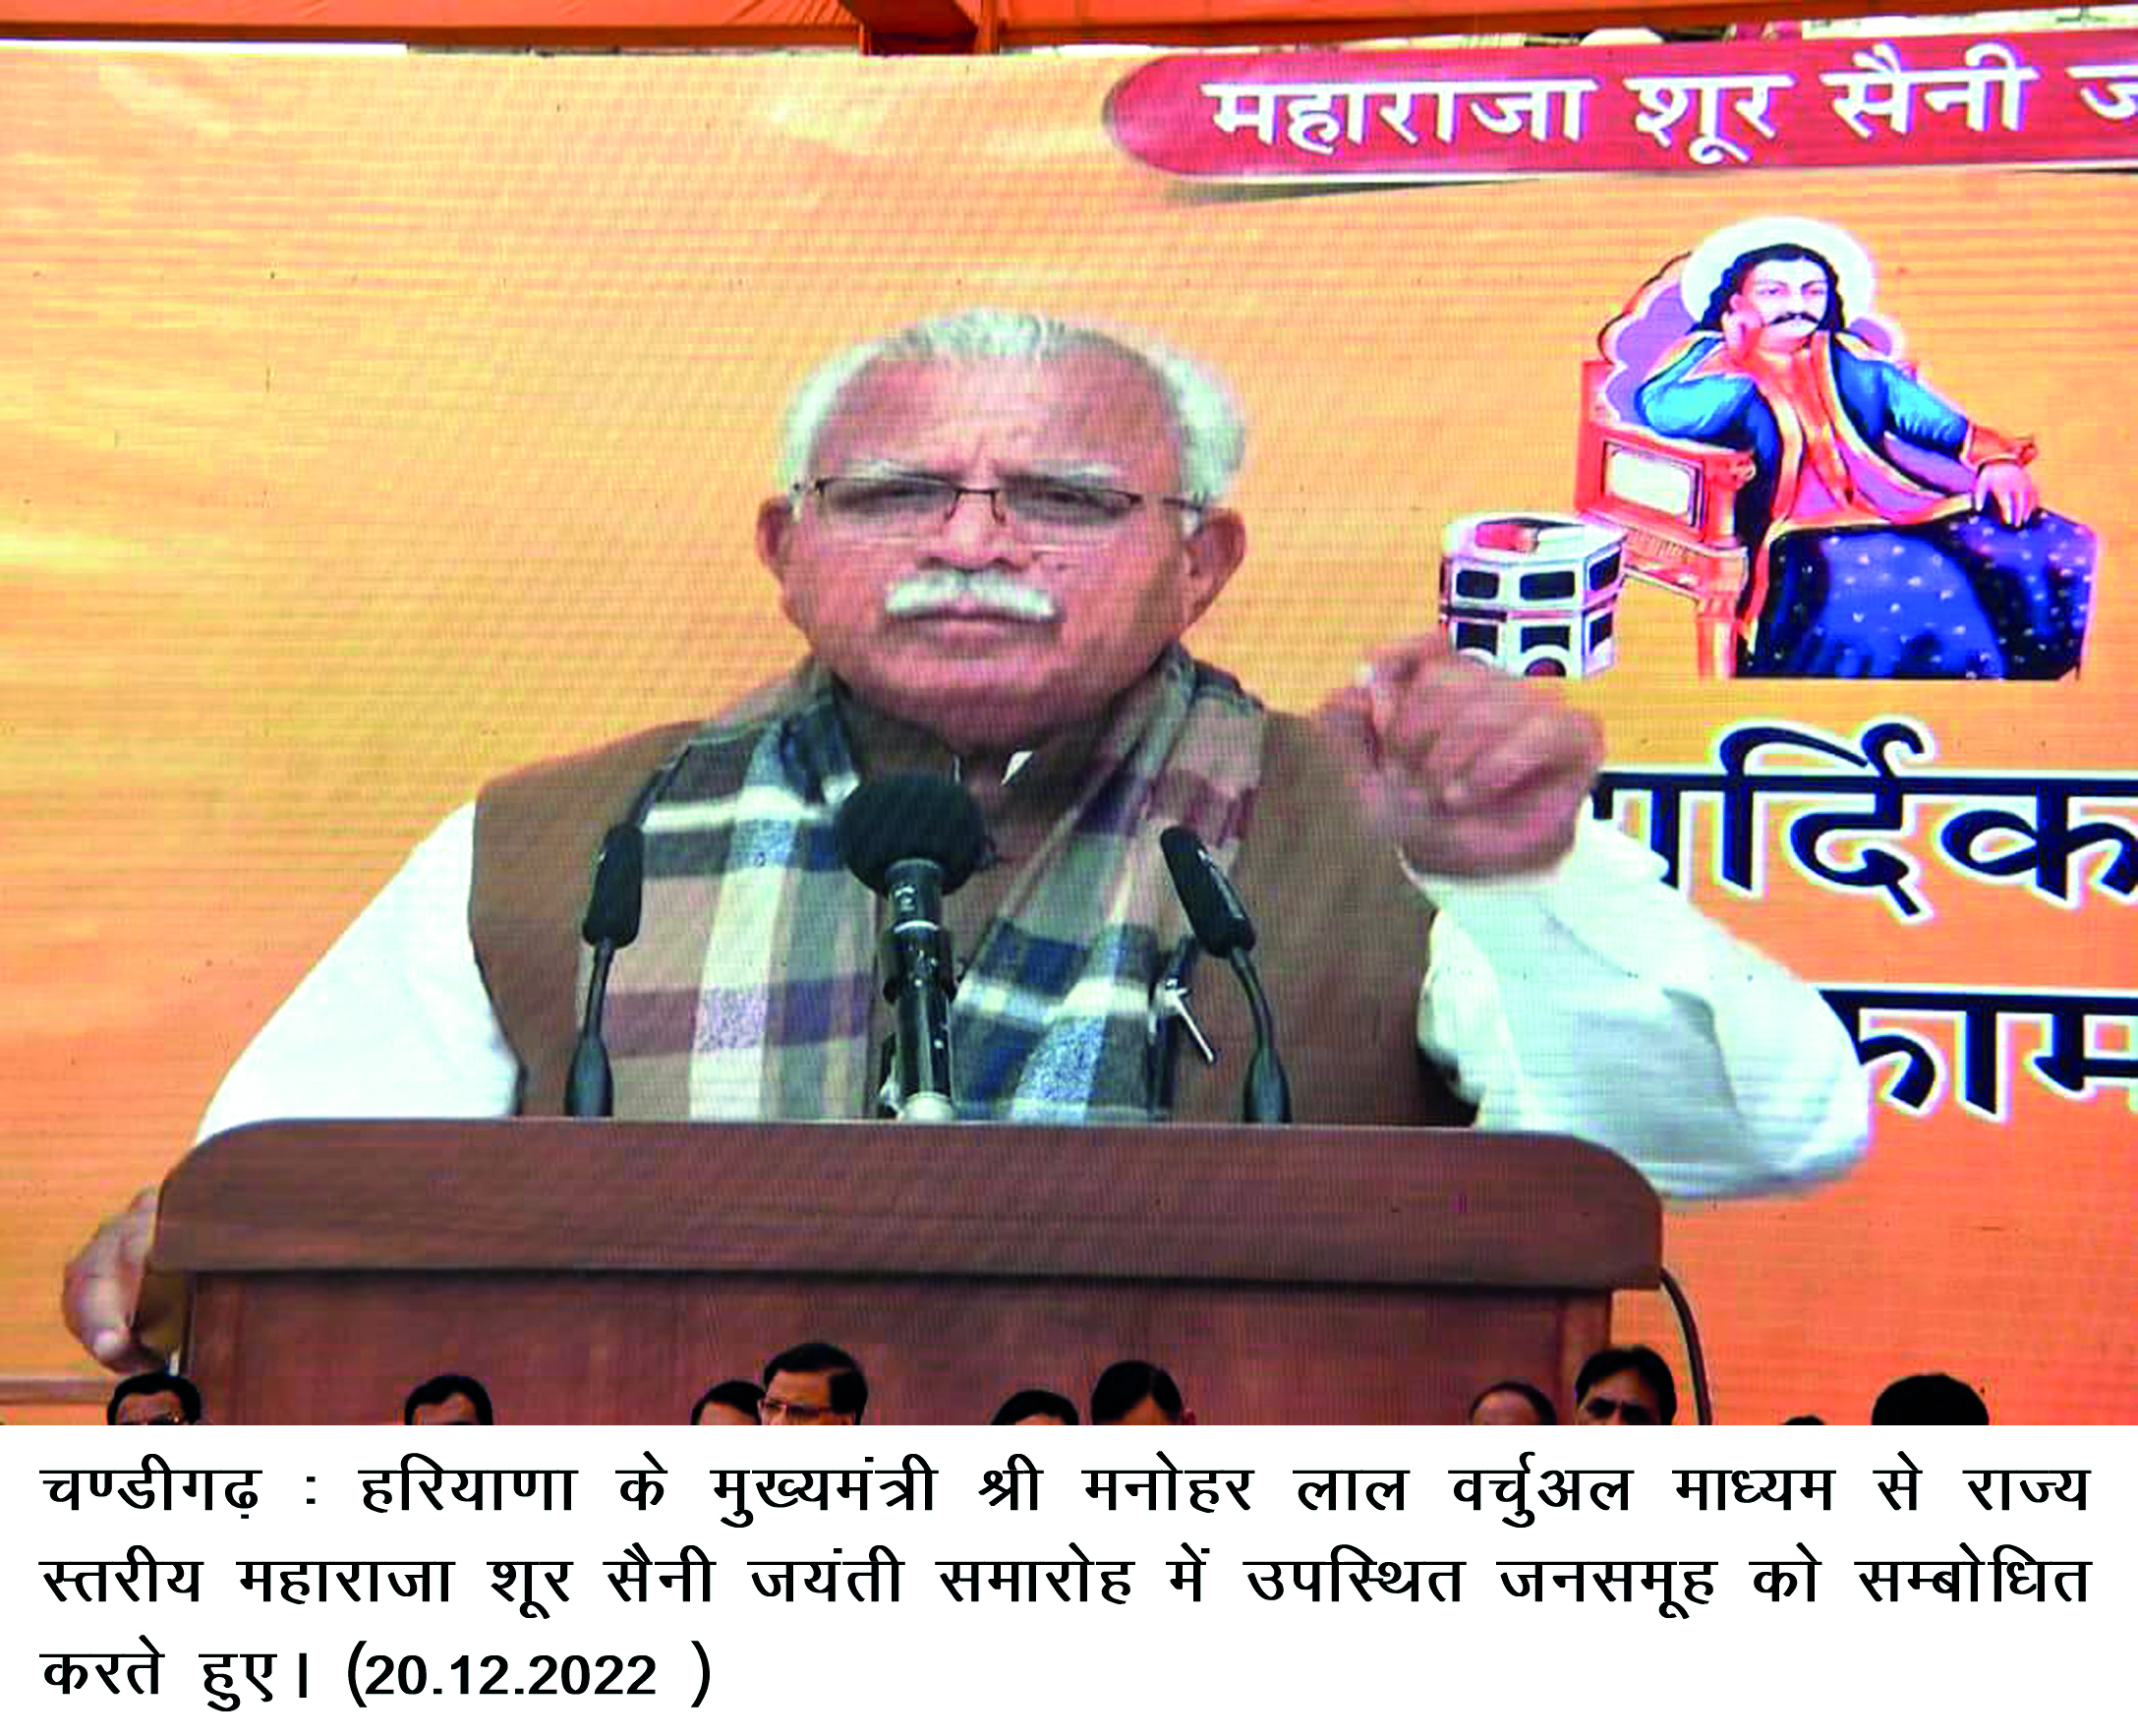 Haryana CM launches Mukhya Mantri Awas Yojna